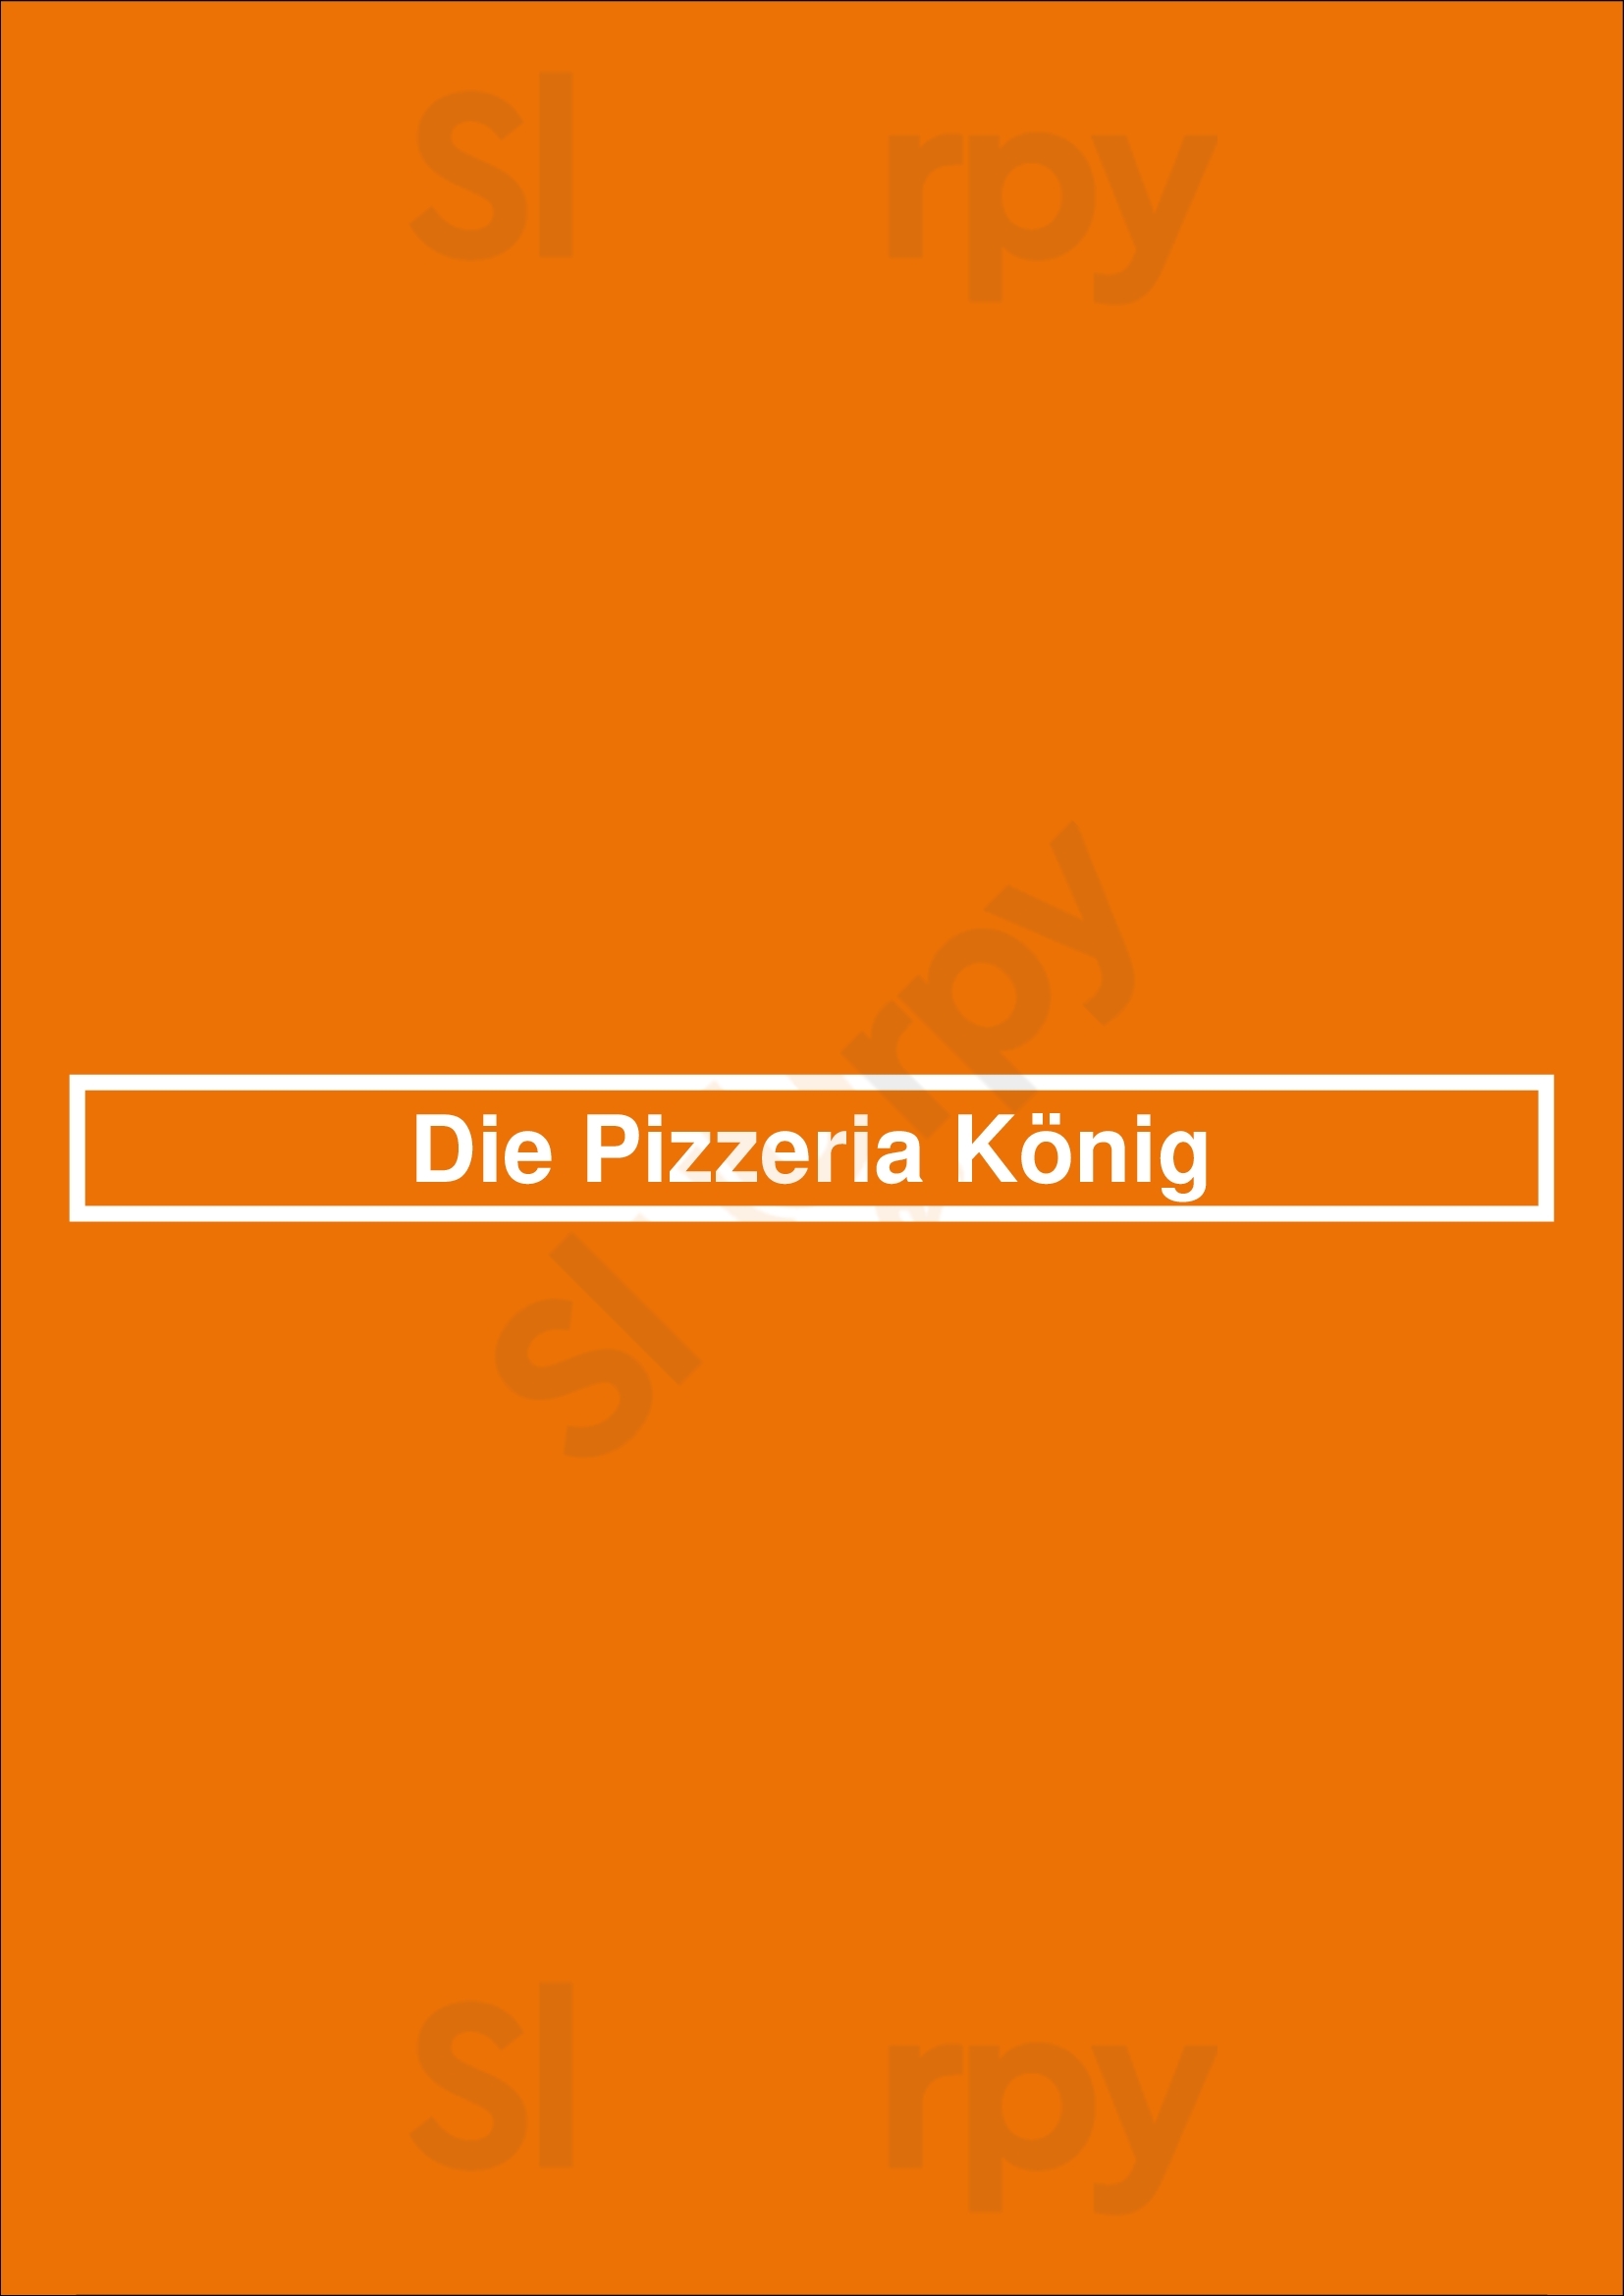 Die Pizzeria König Hamburg Menu - 1